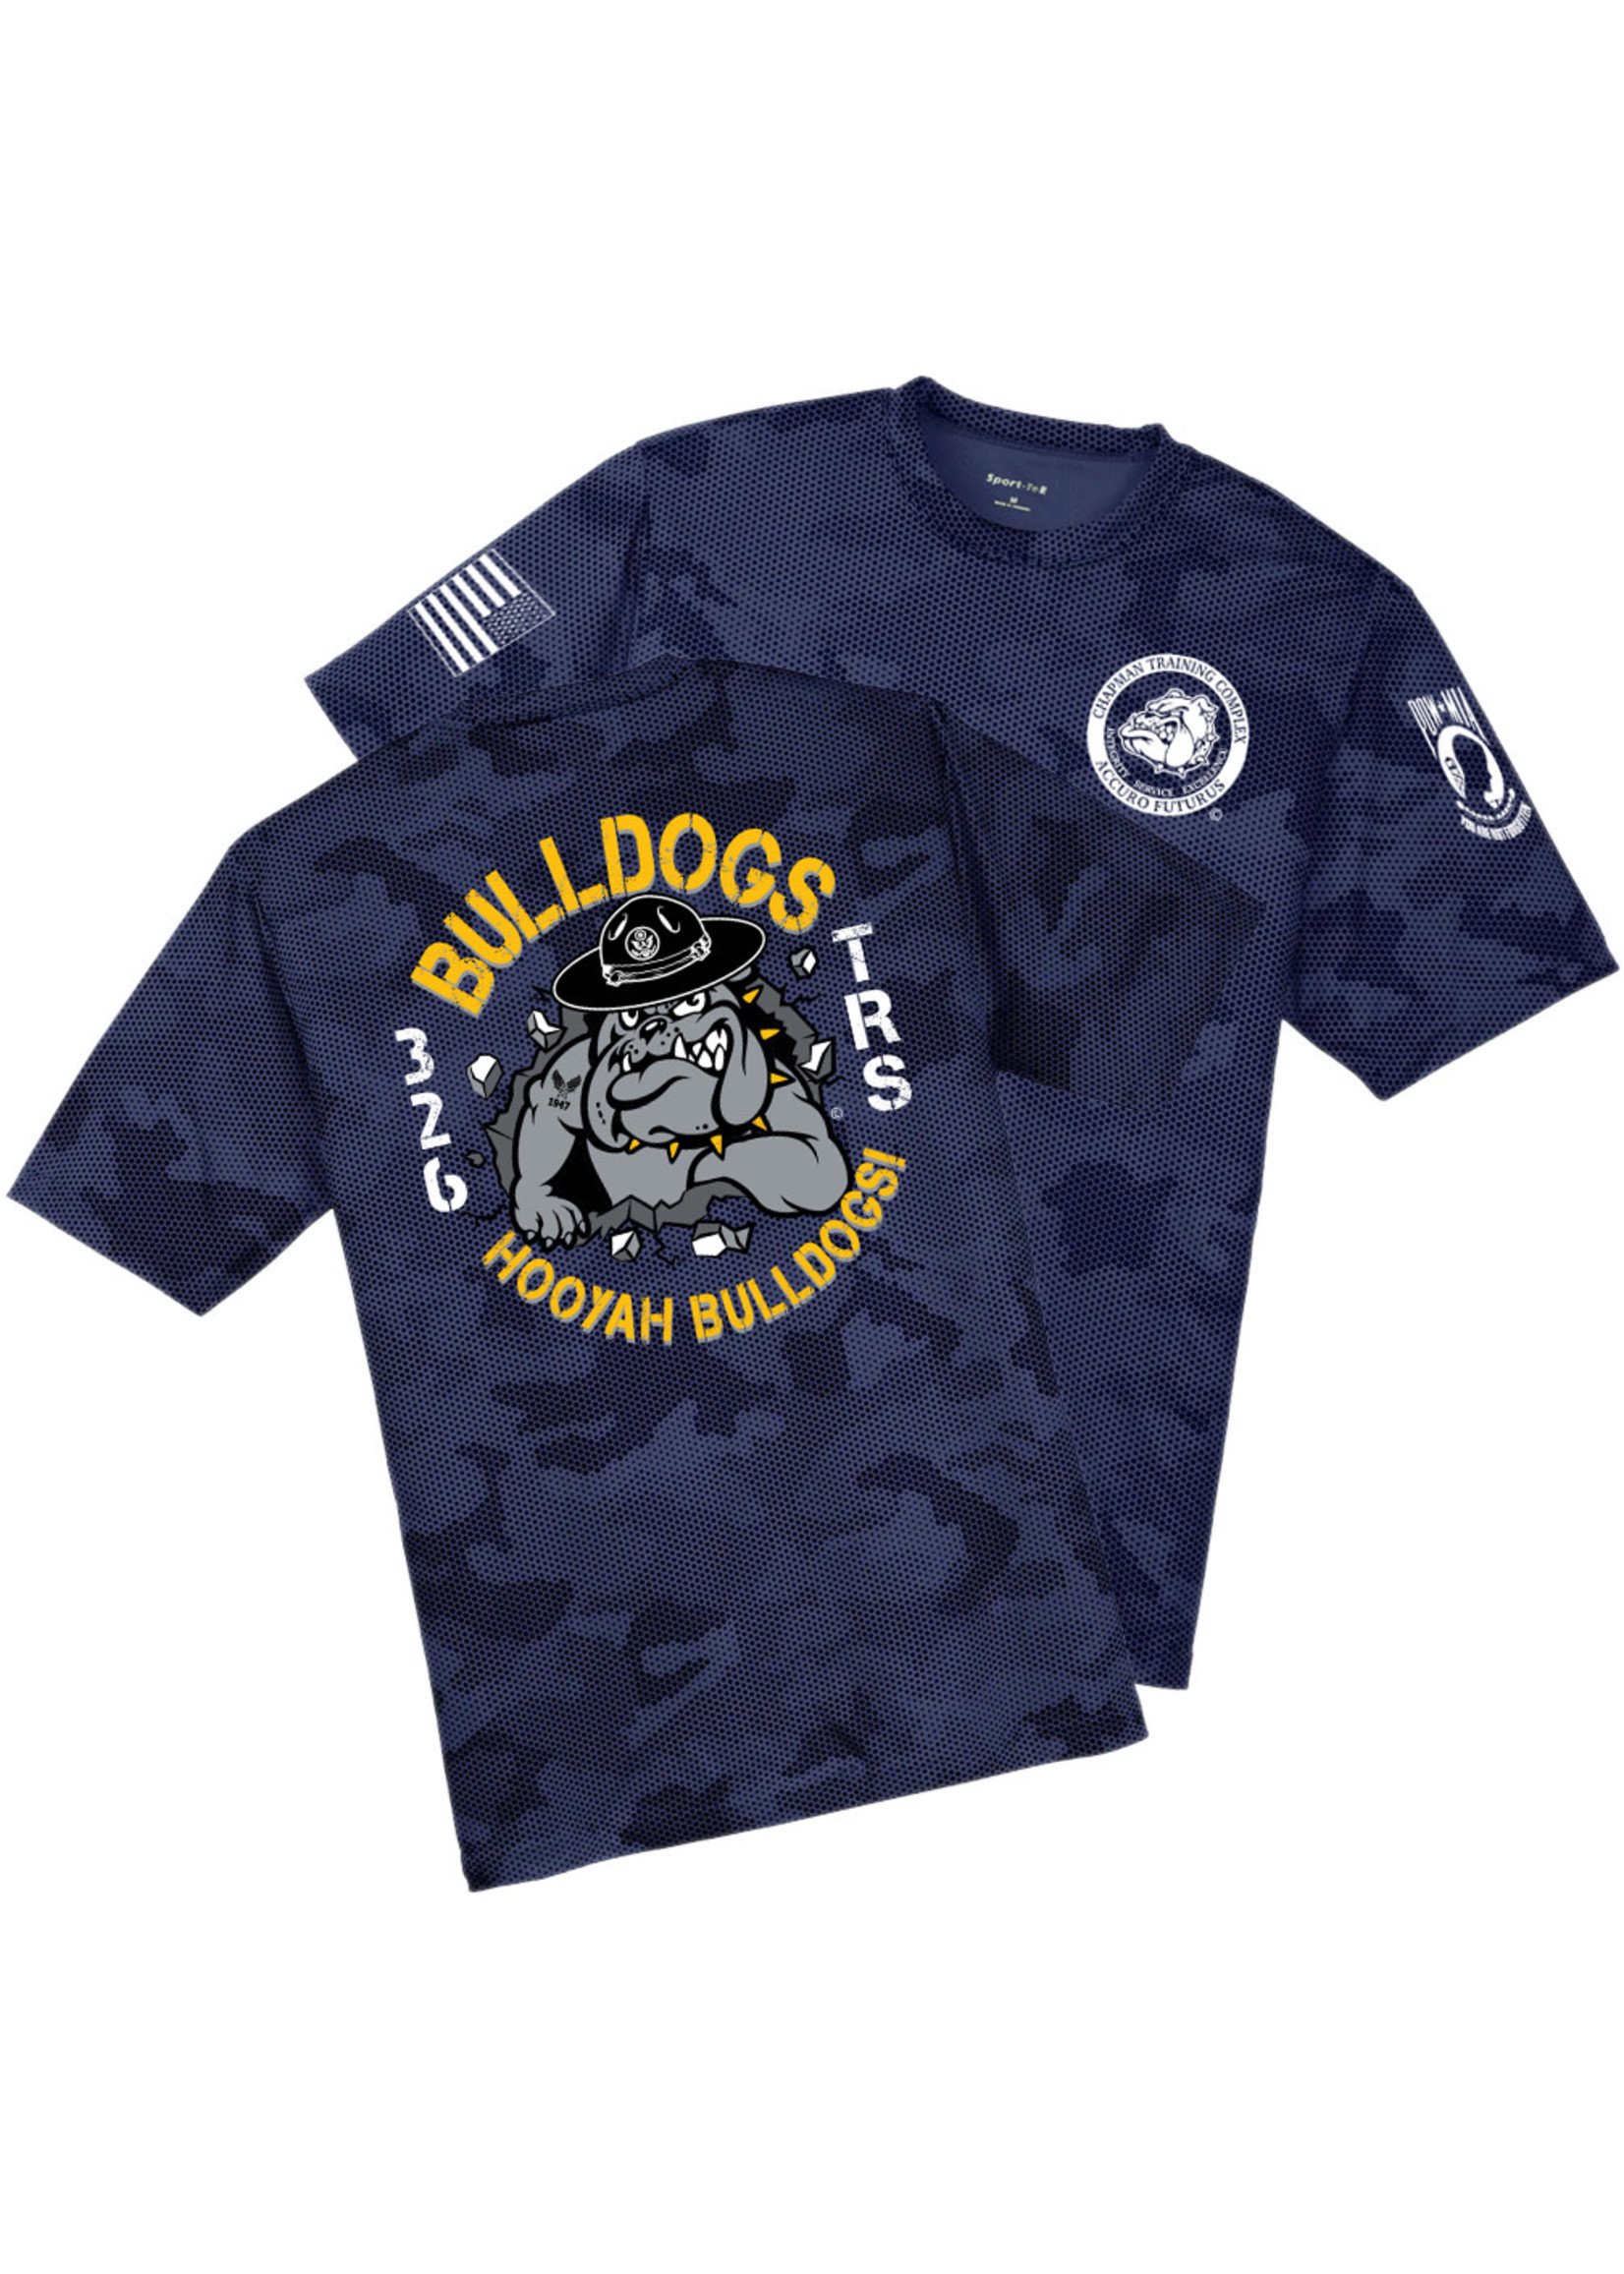 326th Bulldogs Digi Wicking Shirt